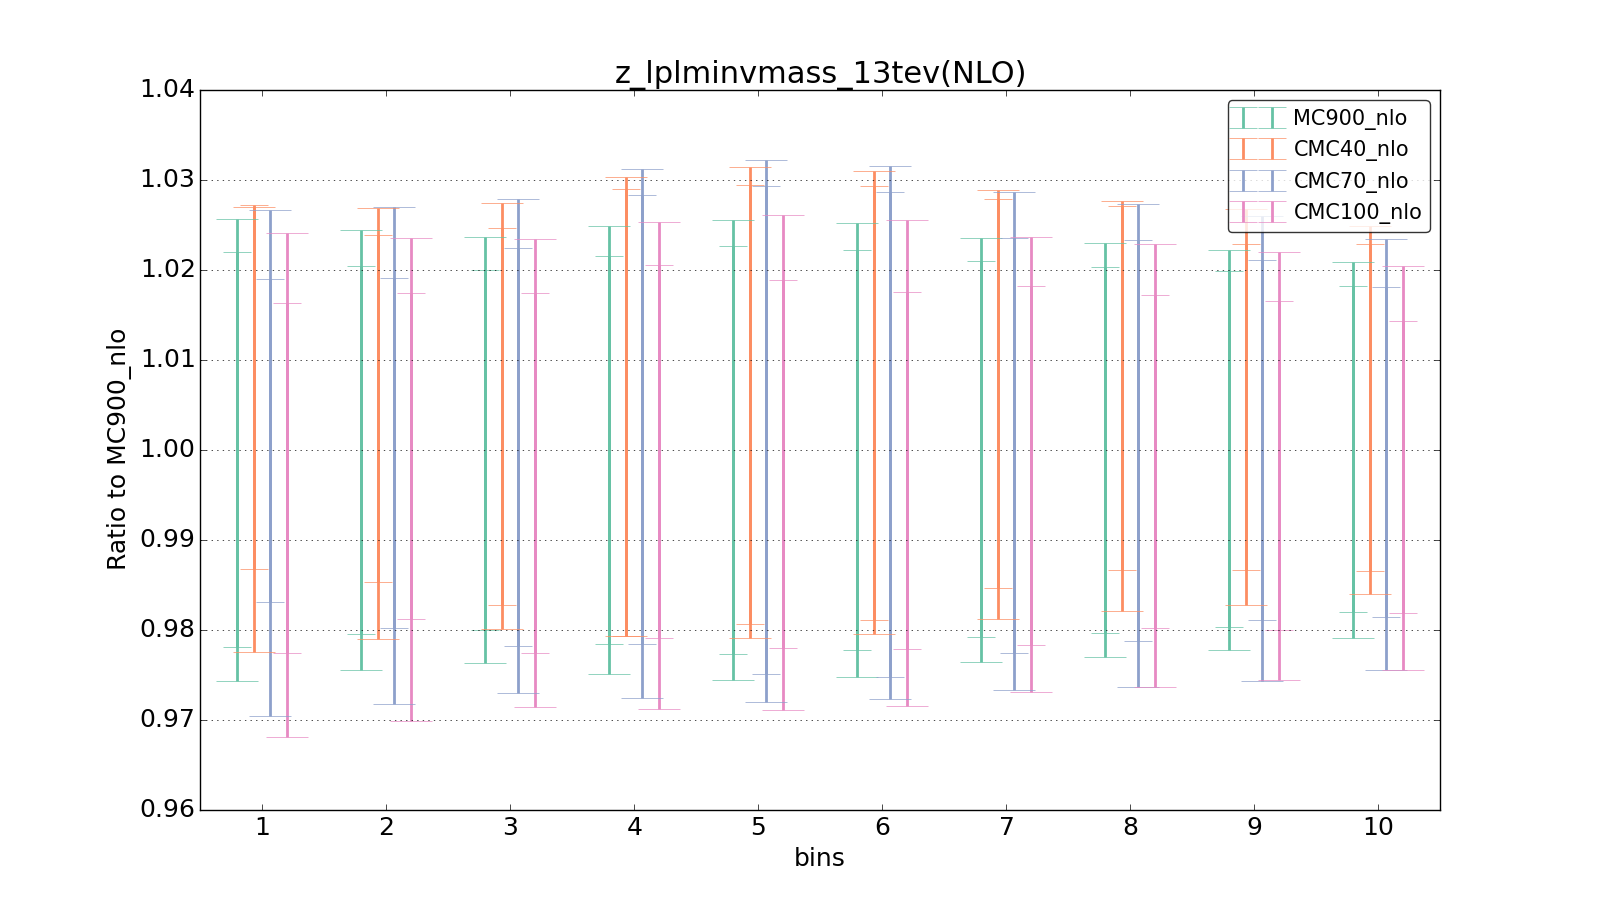 figure plots/CMCpheno/group_1_ciplot_z_lplminvmass_13tev(NLO).png